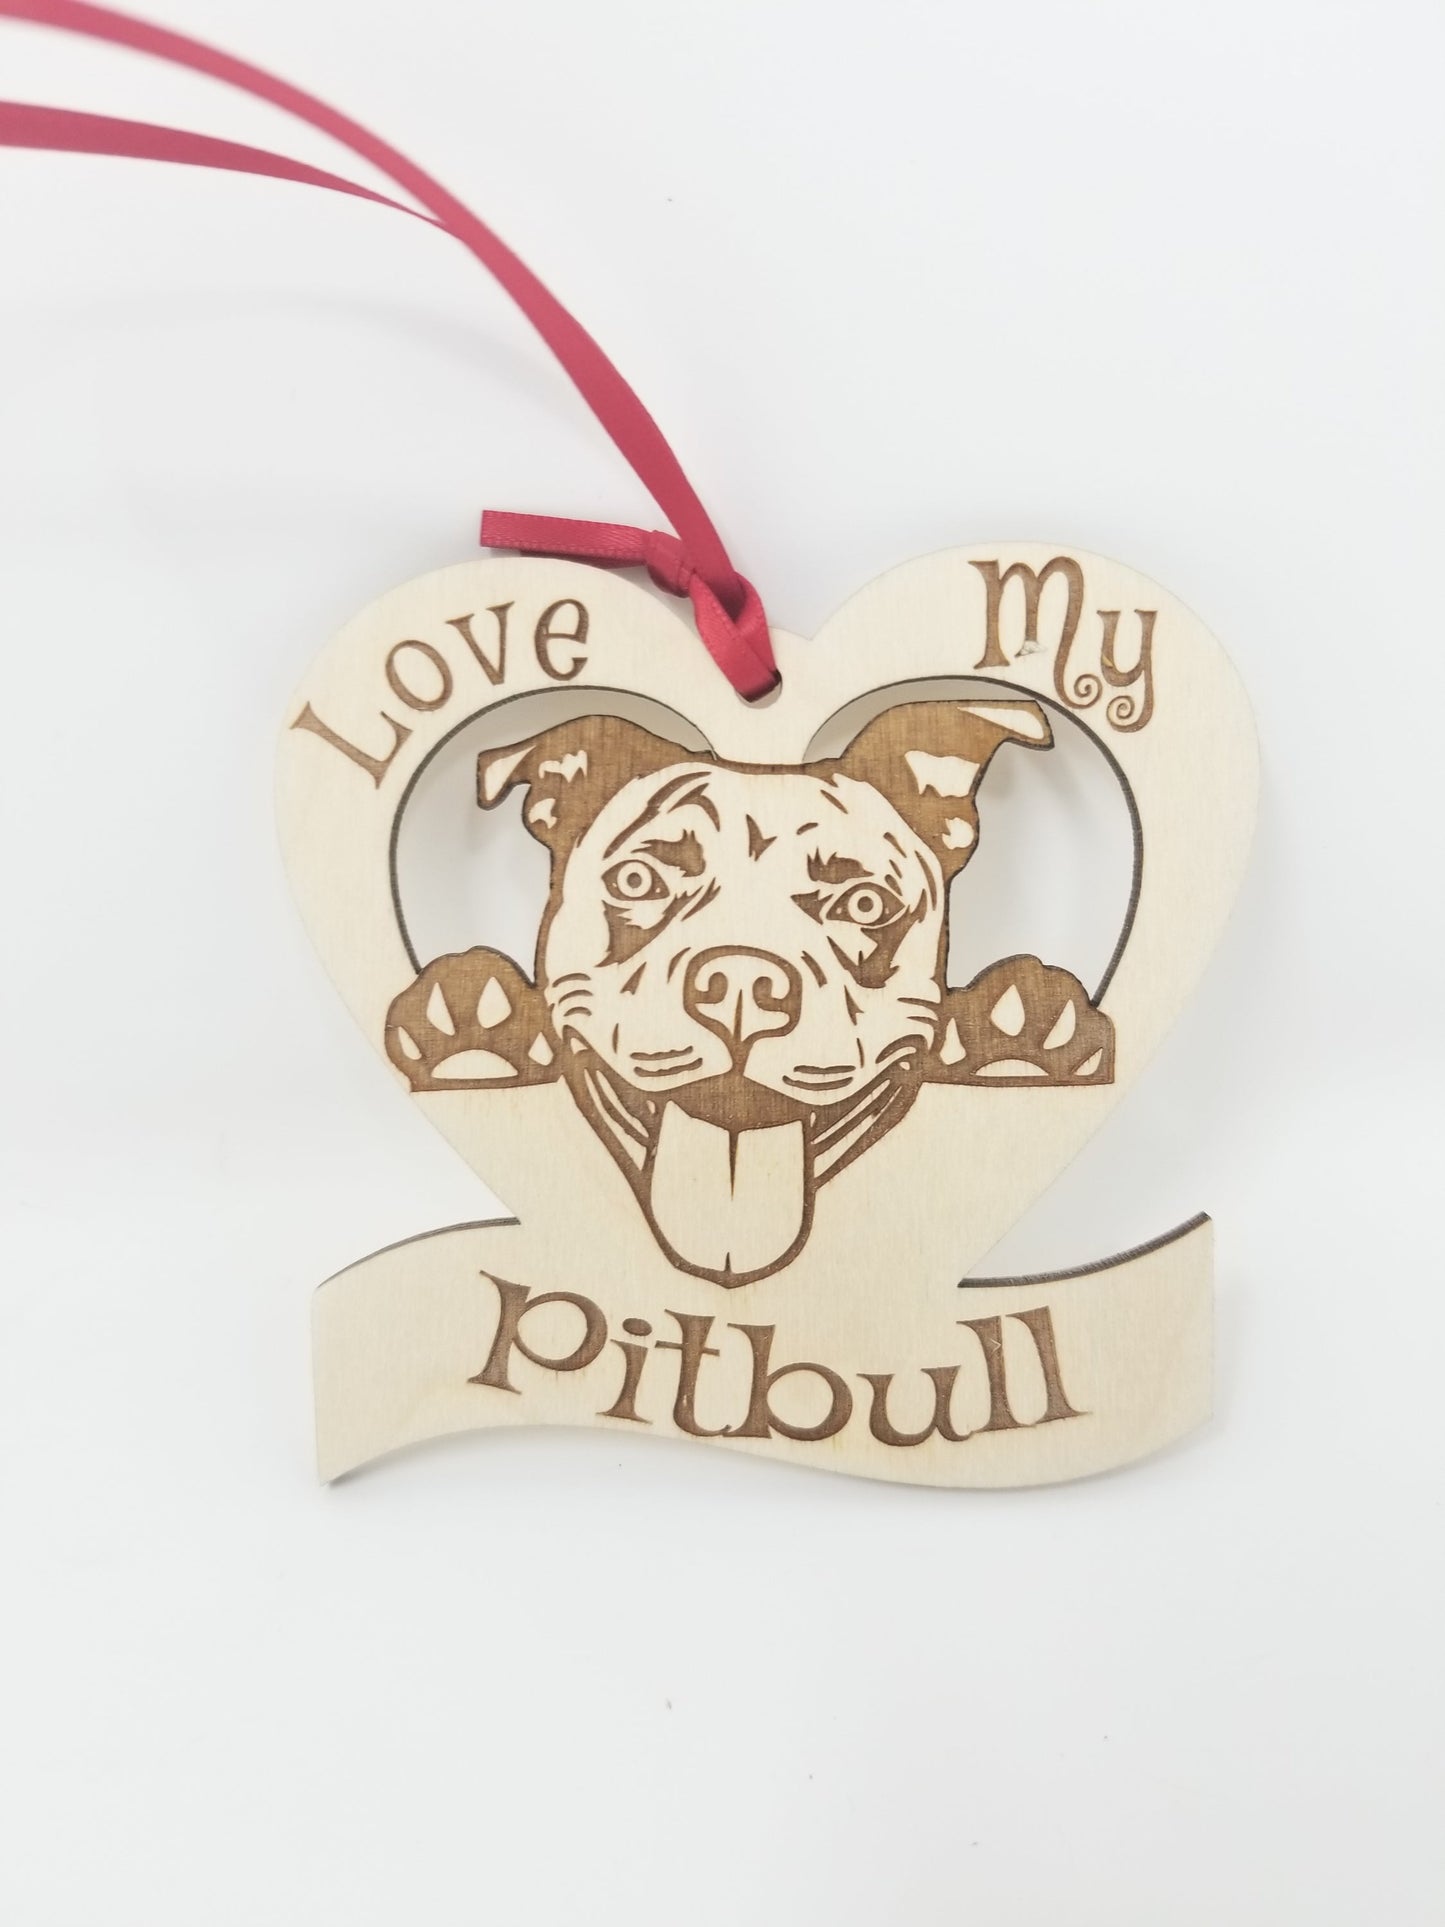 Love My Pitbull Ornament